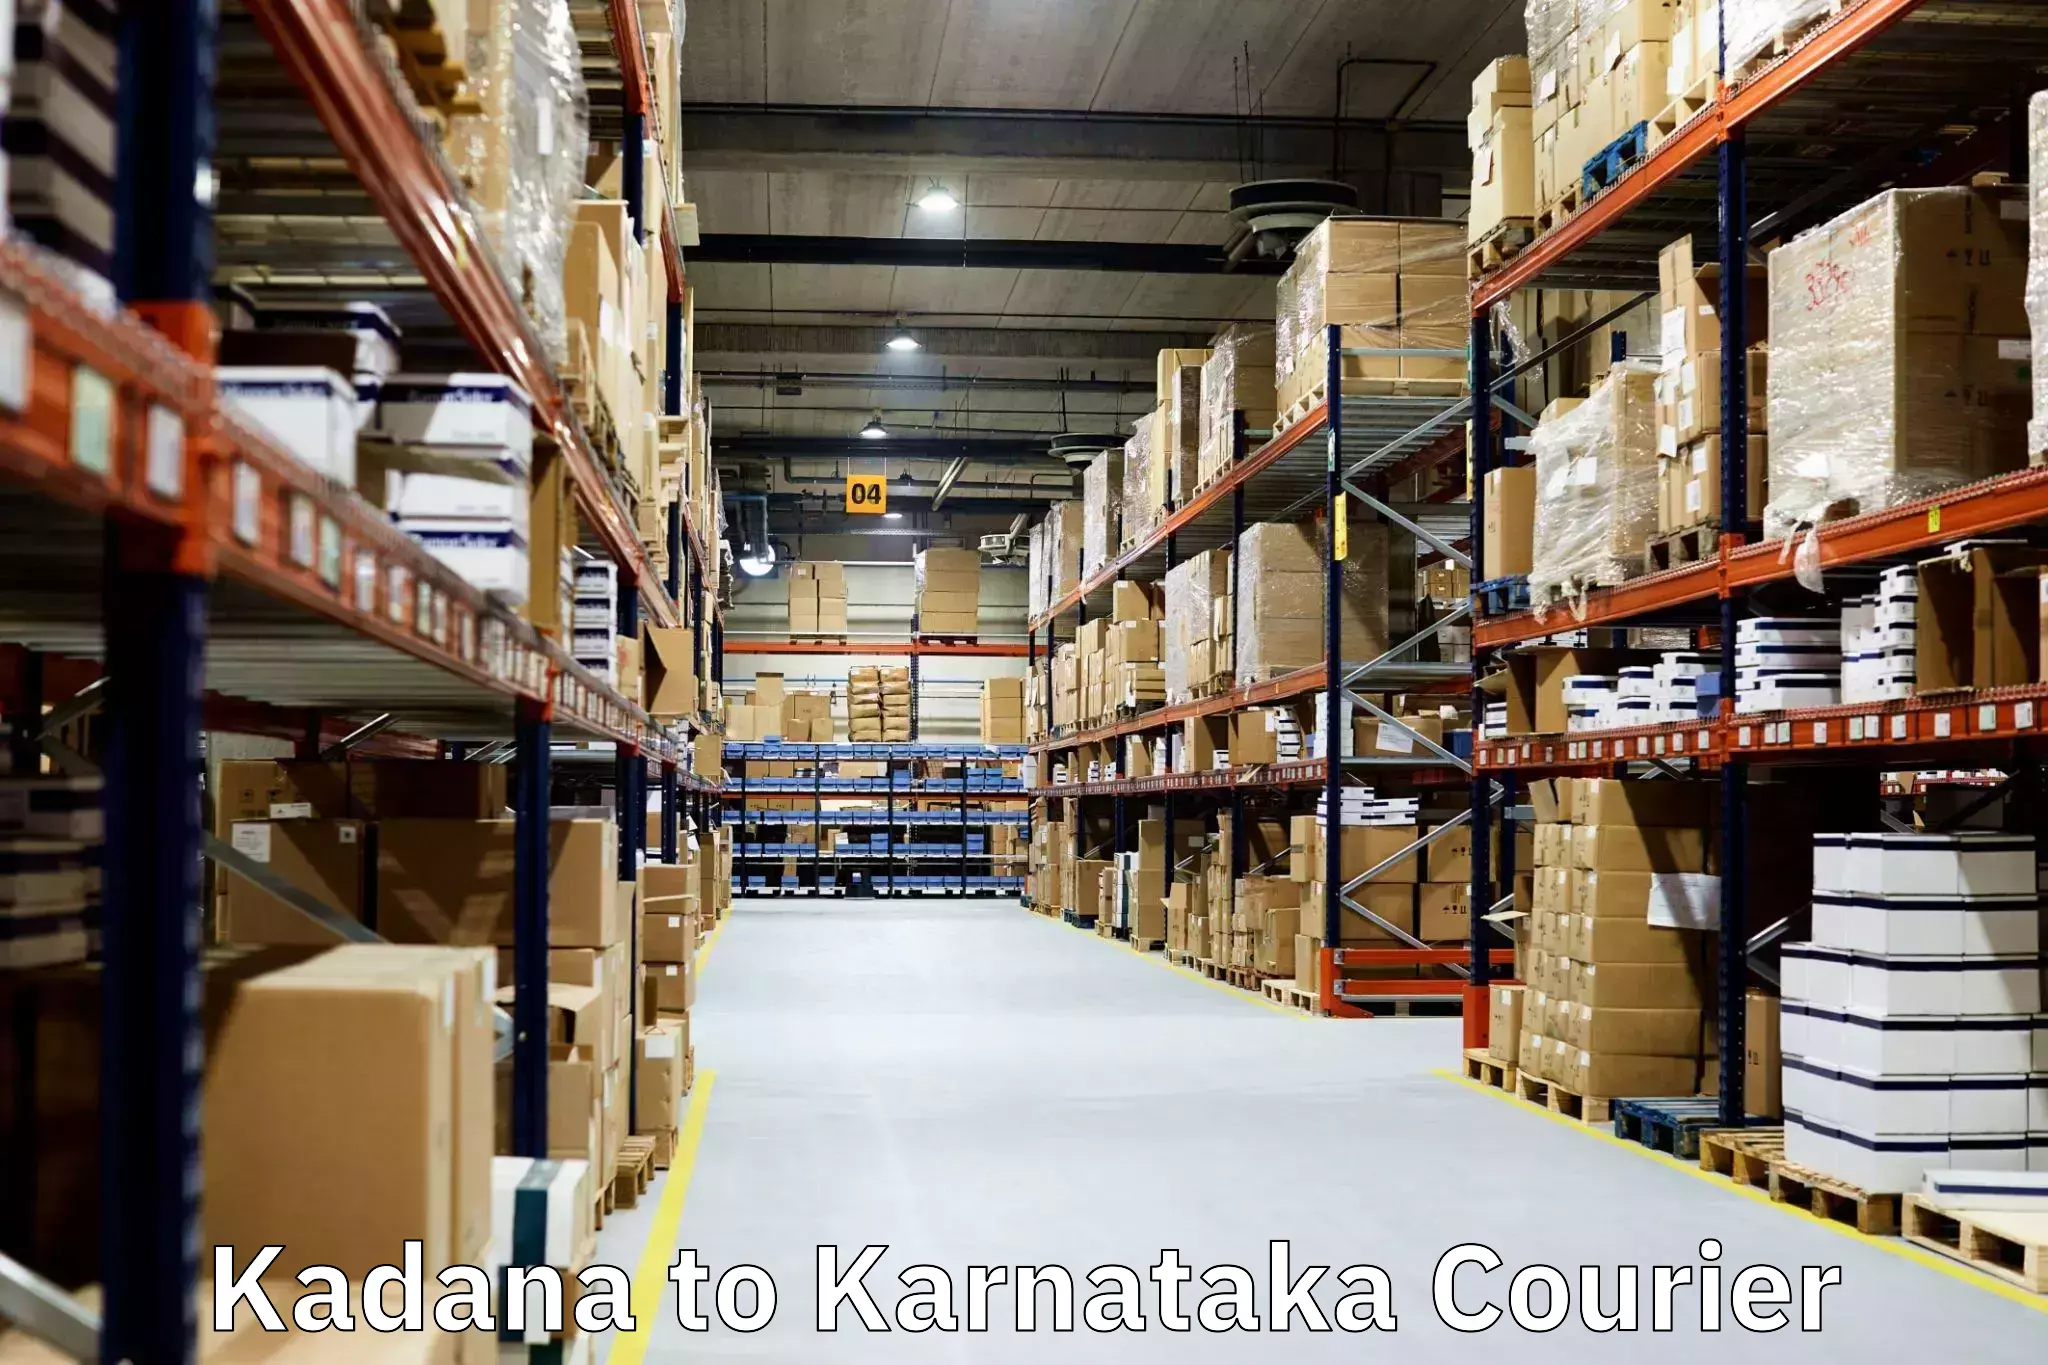 Professional movers and packers in Kadana to Karnataka